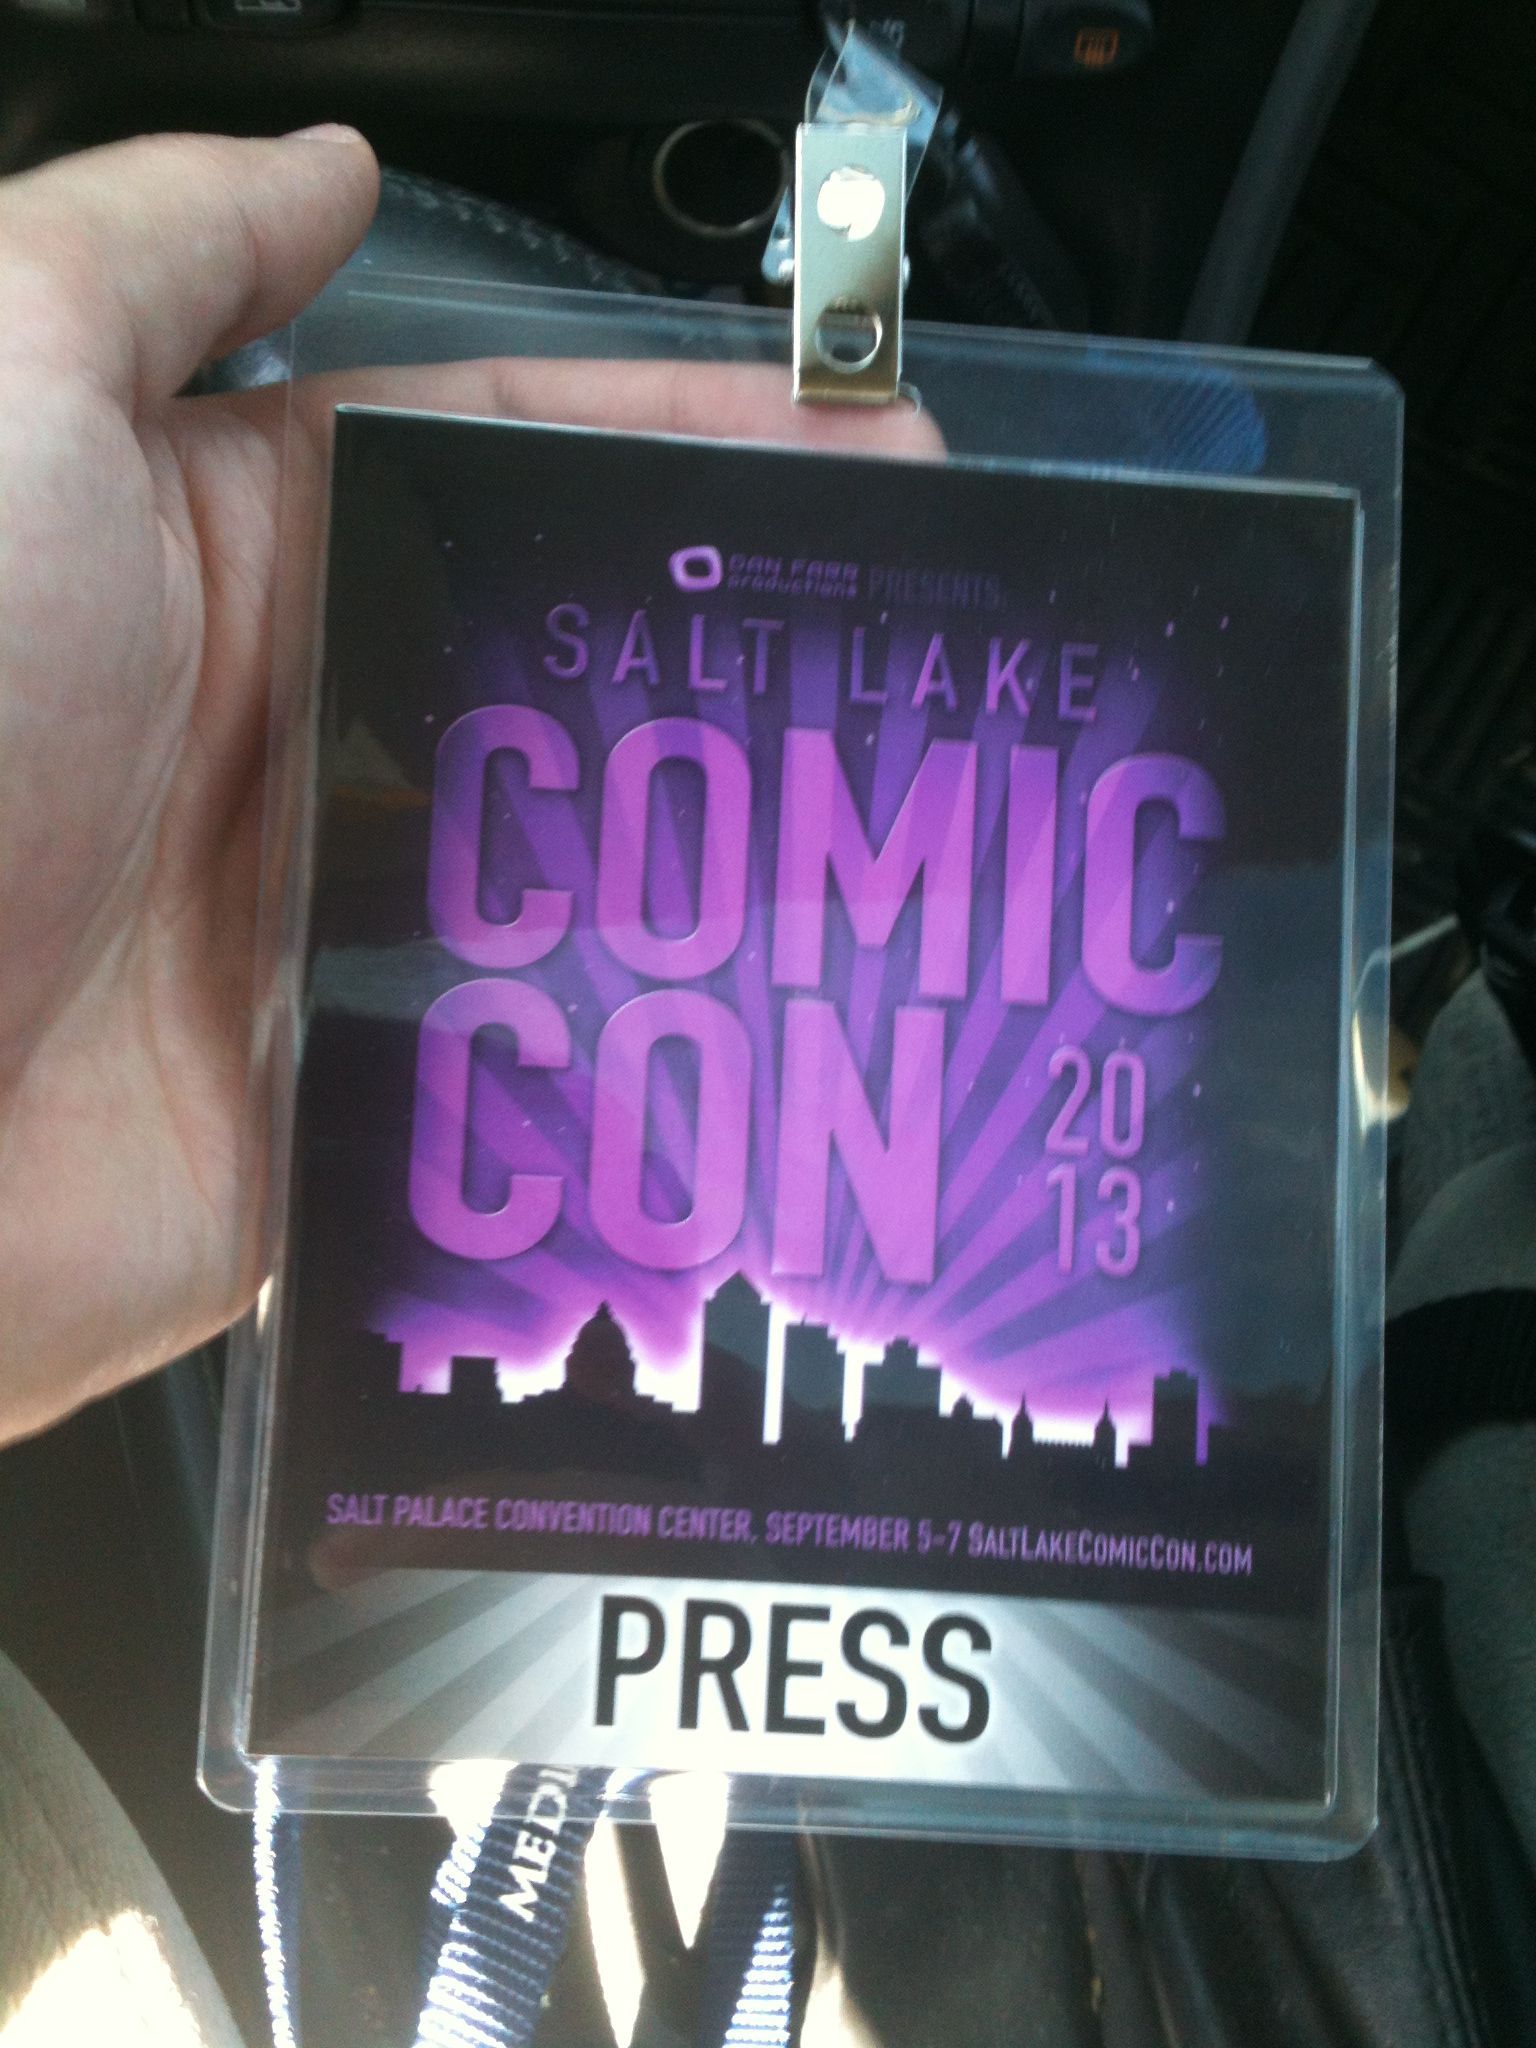 A press pass for the 2013 Salt Lake Comic Con.